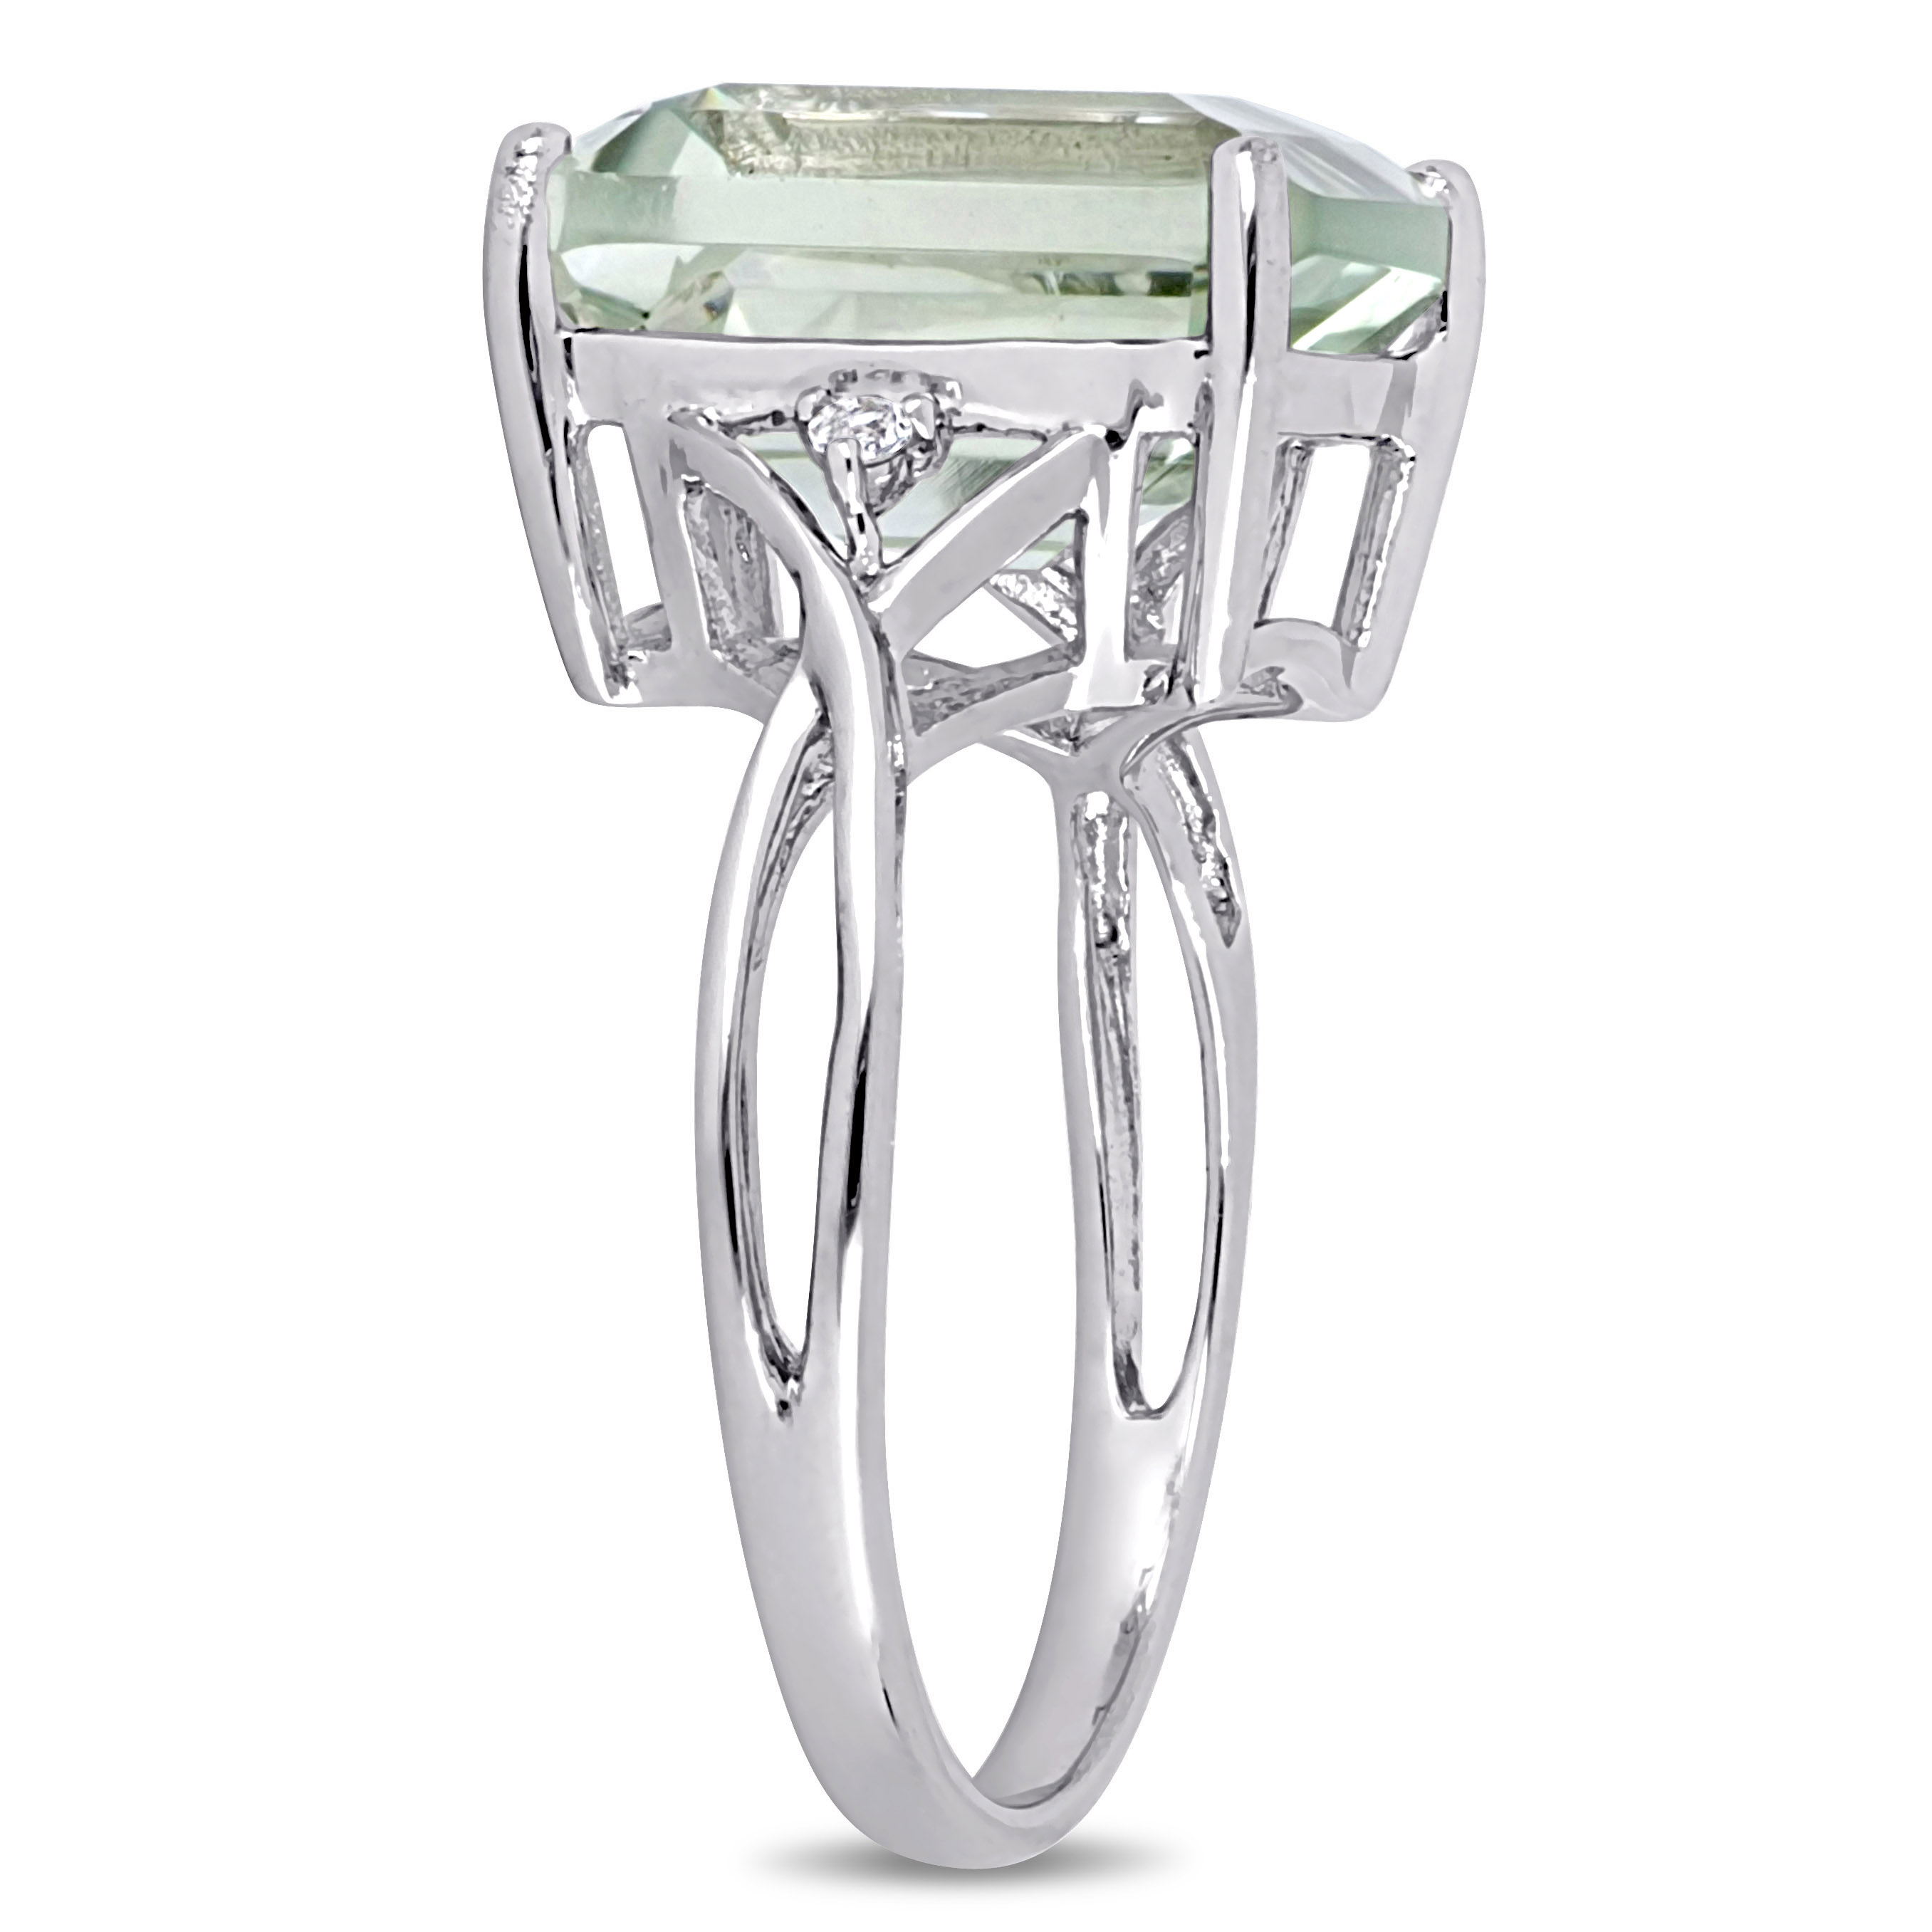 5 5/8 CT TGW Emerald Cut Green Quartz and White Topaz Twist Ring in Sterling Silver